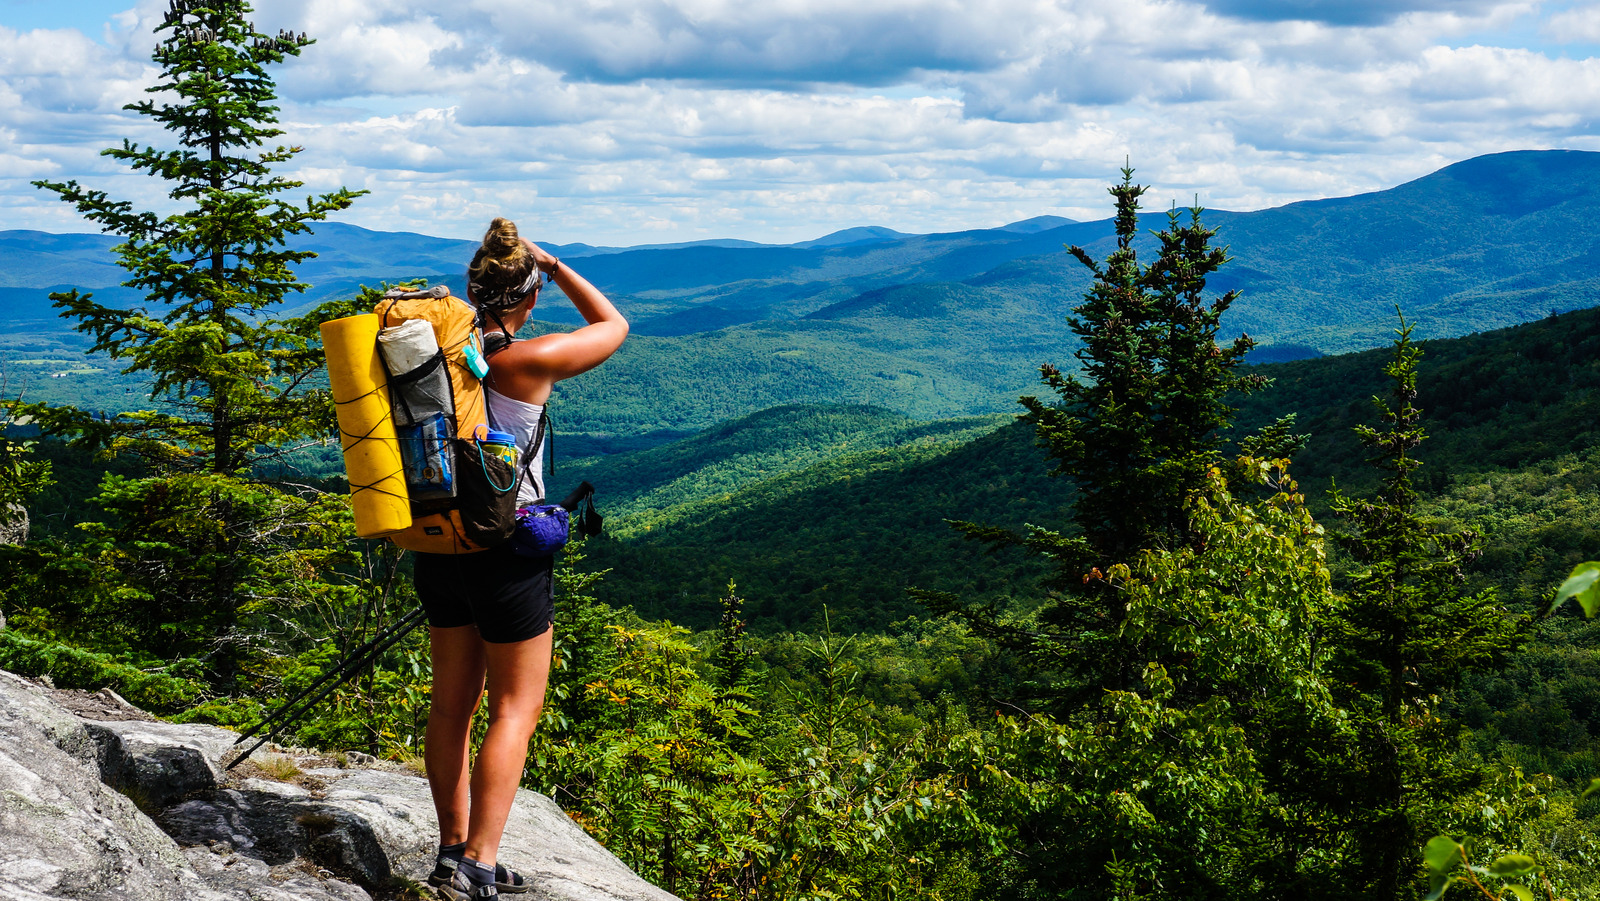 Appalachian Trail Hiking Clothing: 5 Essential Items